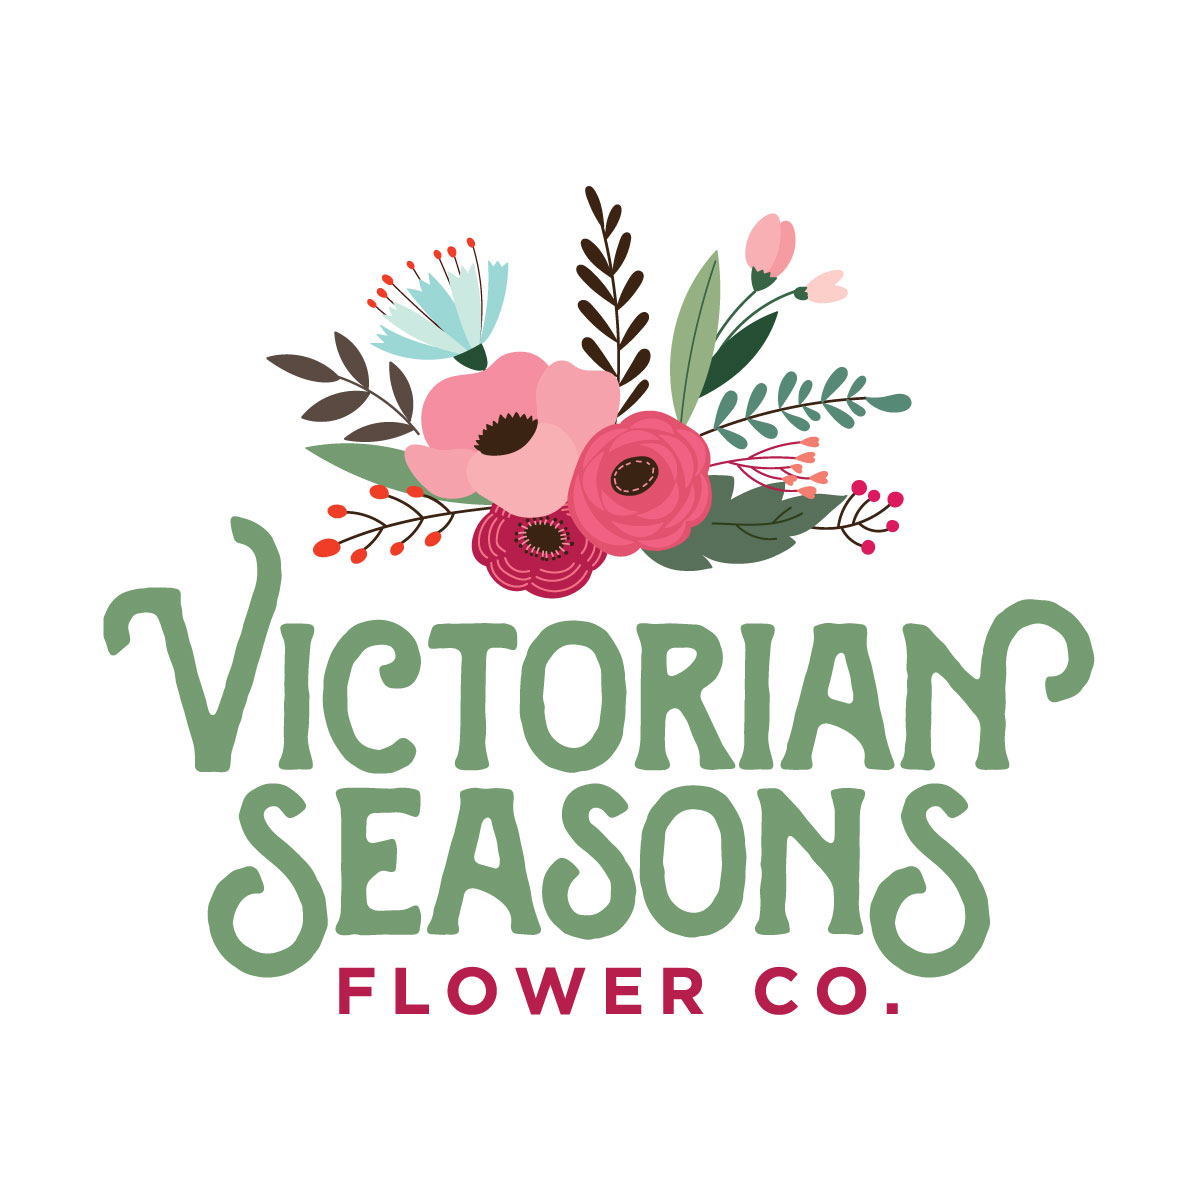 Victorian Seasons